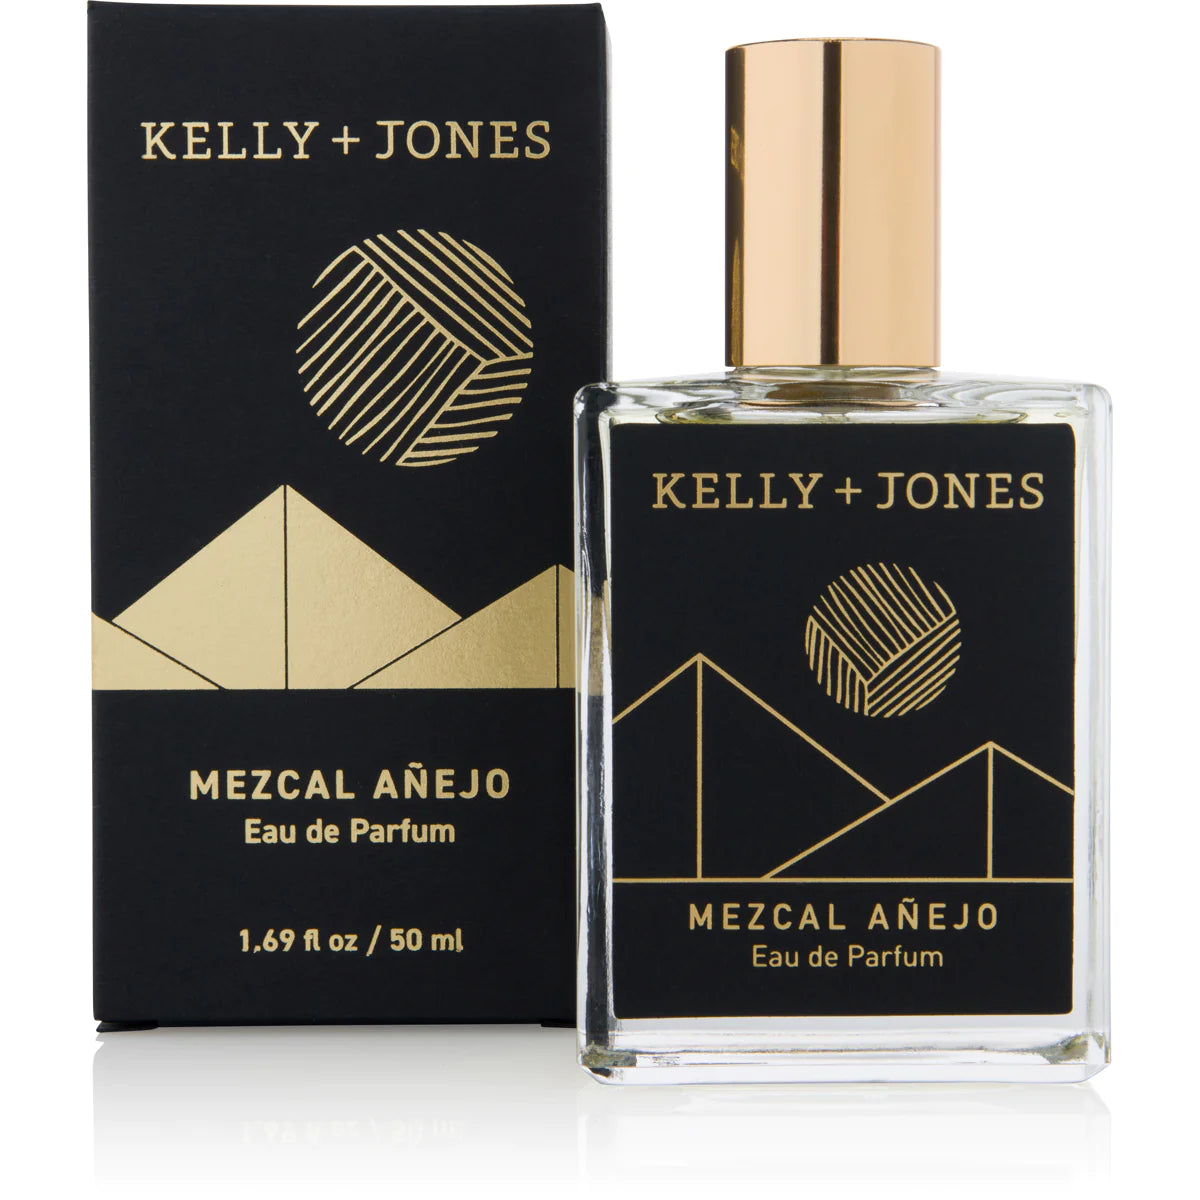 Kelly + Jones I MEZCAL AÑEJO OIL